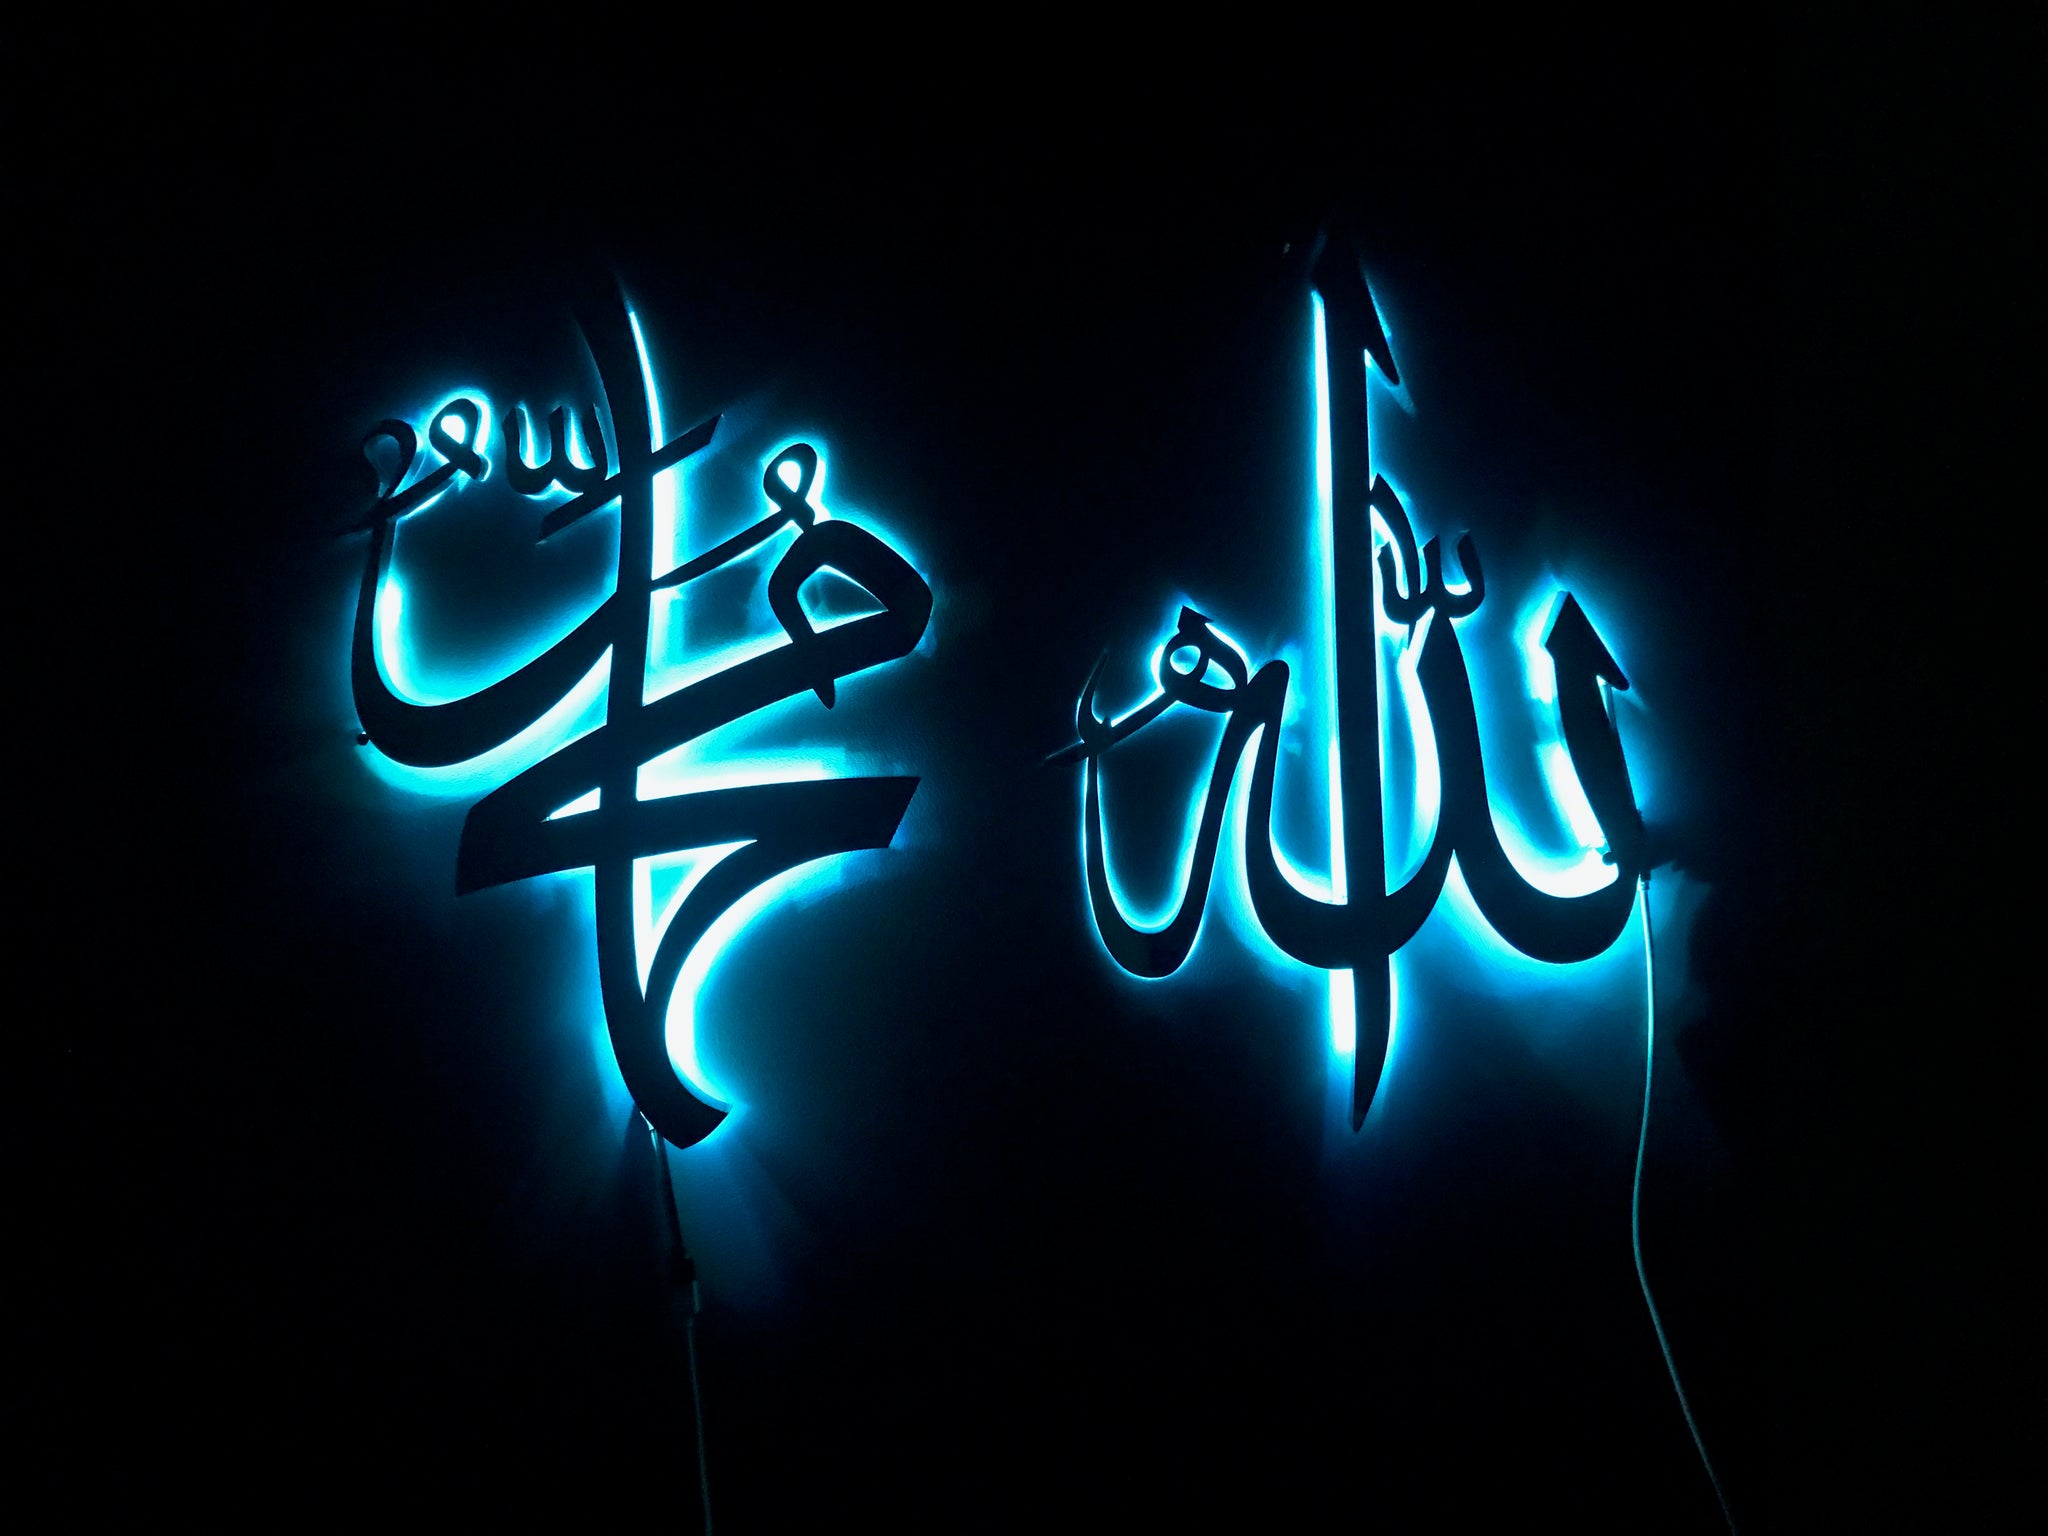 Allah Muhammad LED Stainless Steel Islamic Wall Art